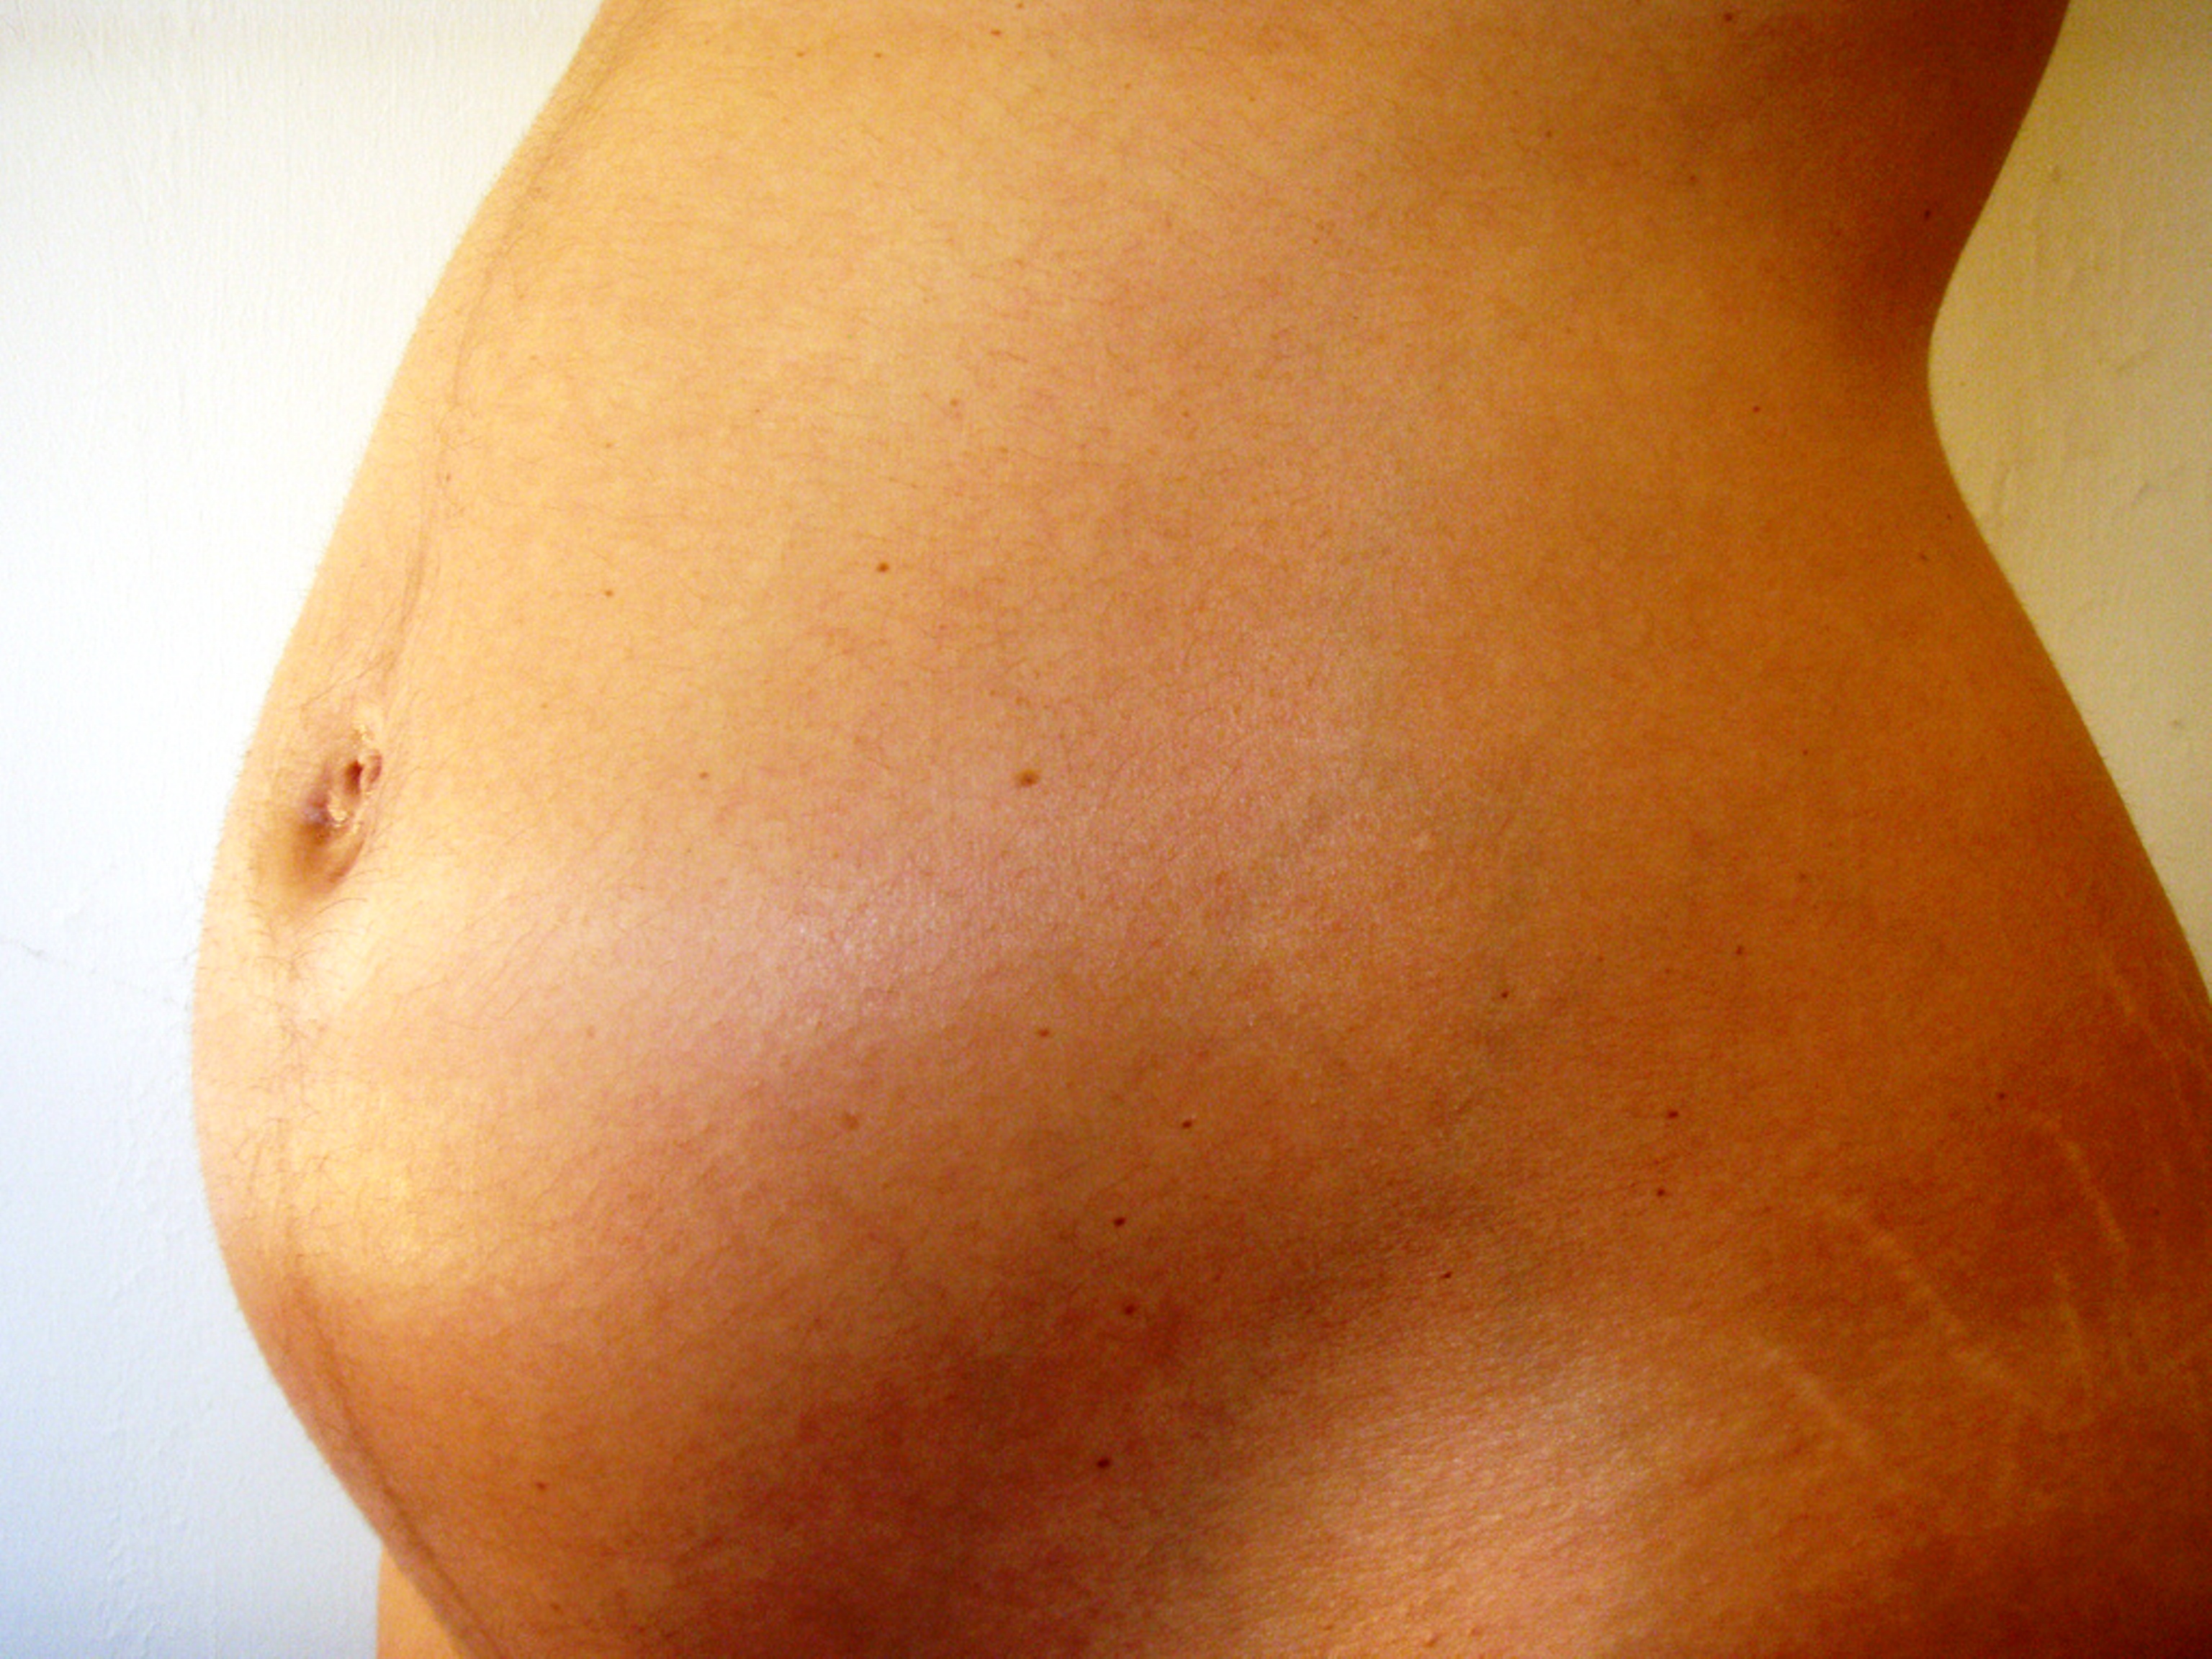 чешутся растяжки на груди при беременности фото 108